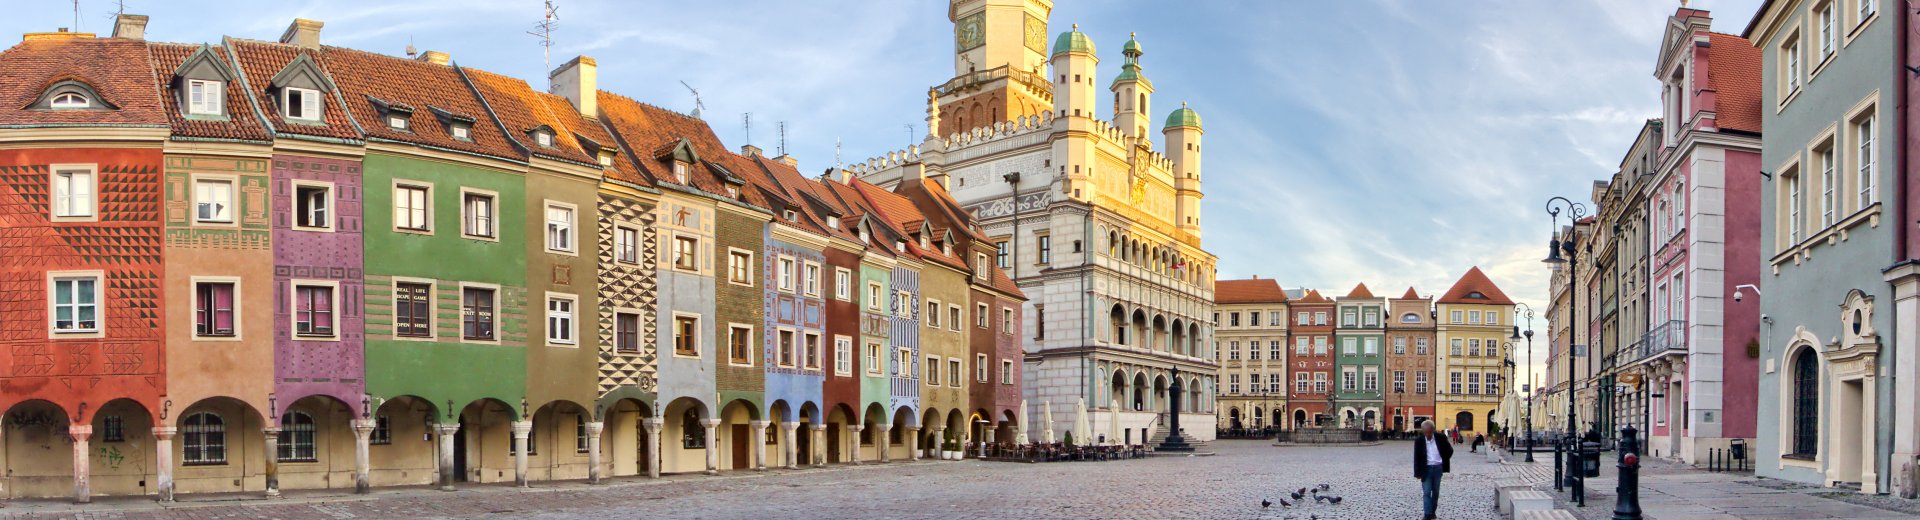 Poznań – miasto pełne historii